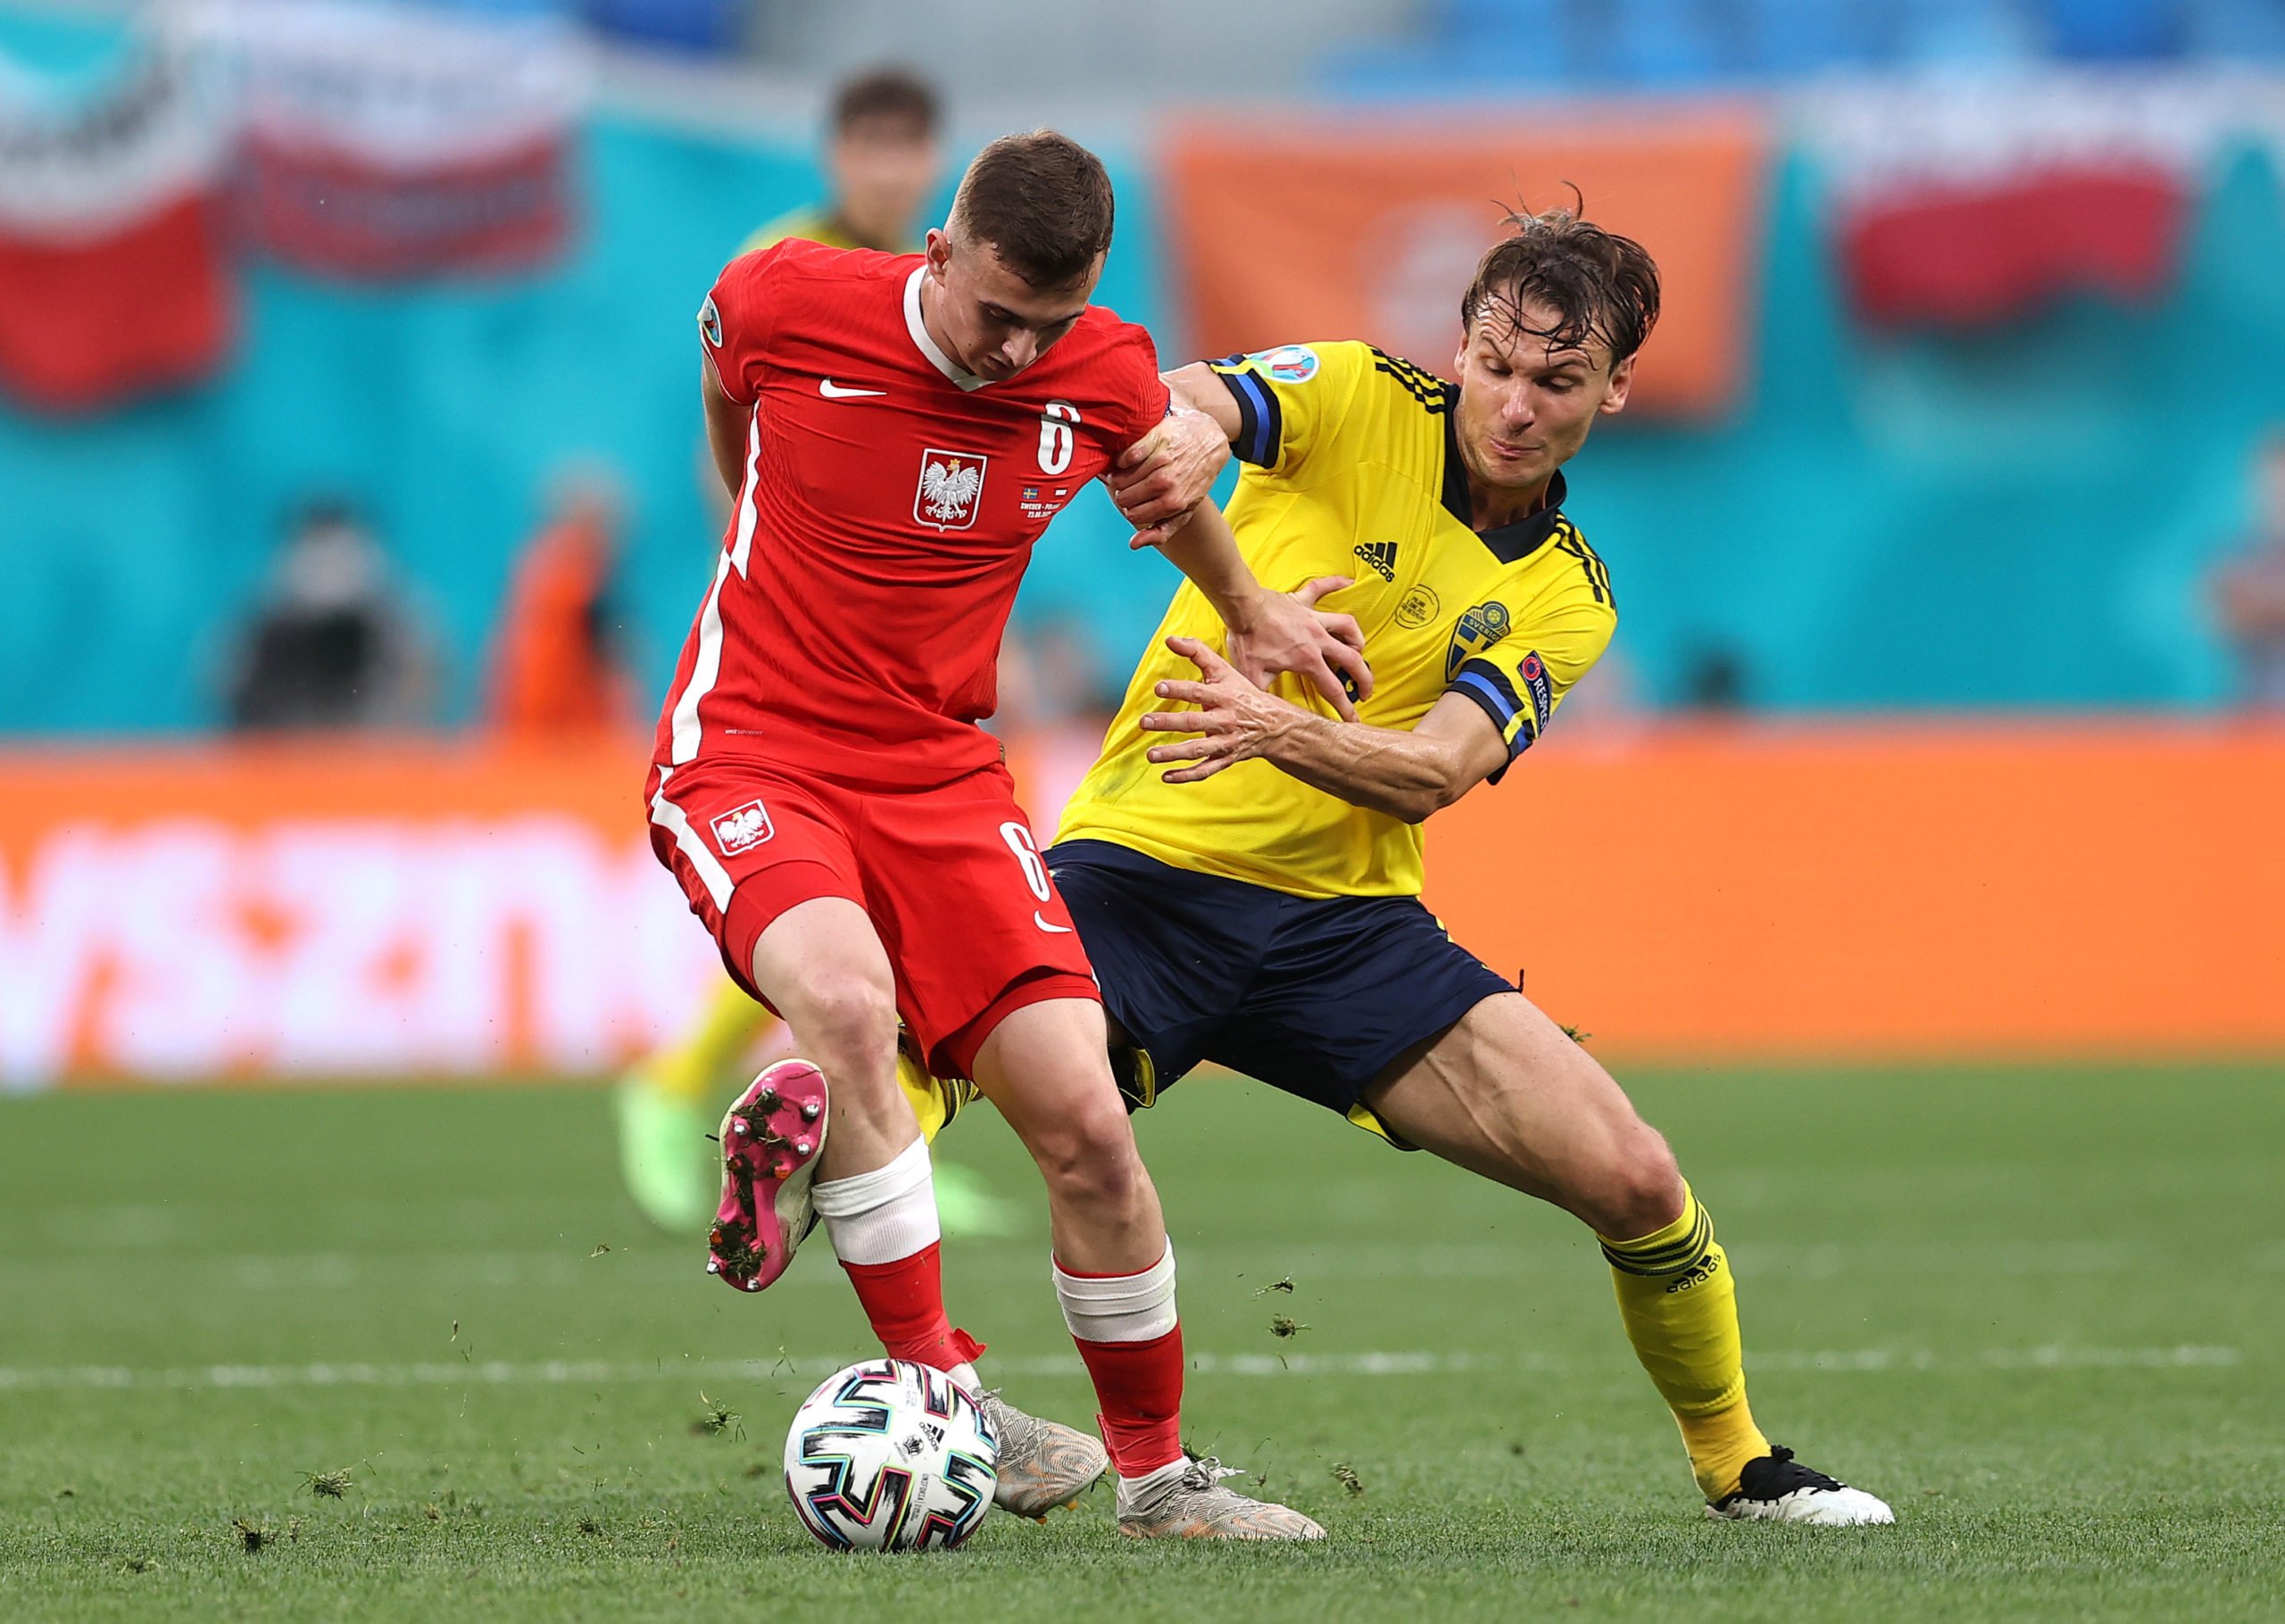 Liverpool target Kacper Kozlowski in action for Poland